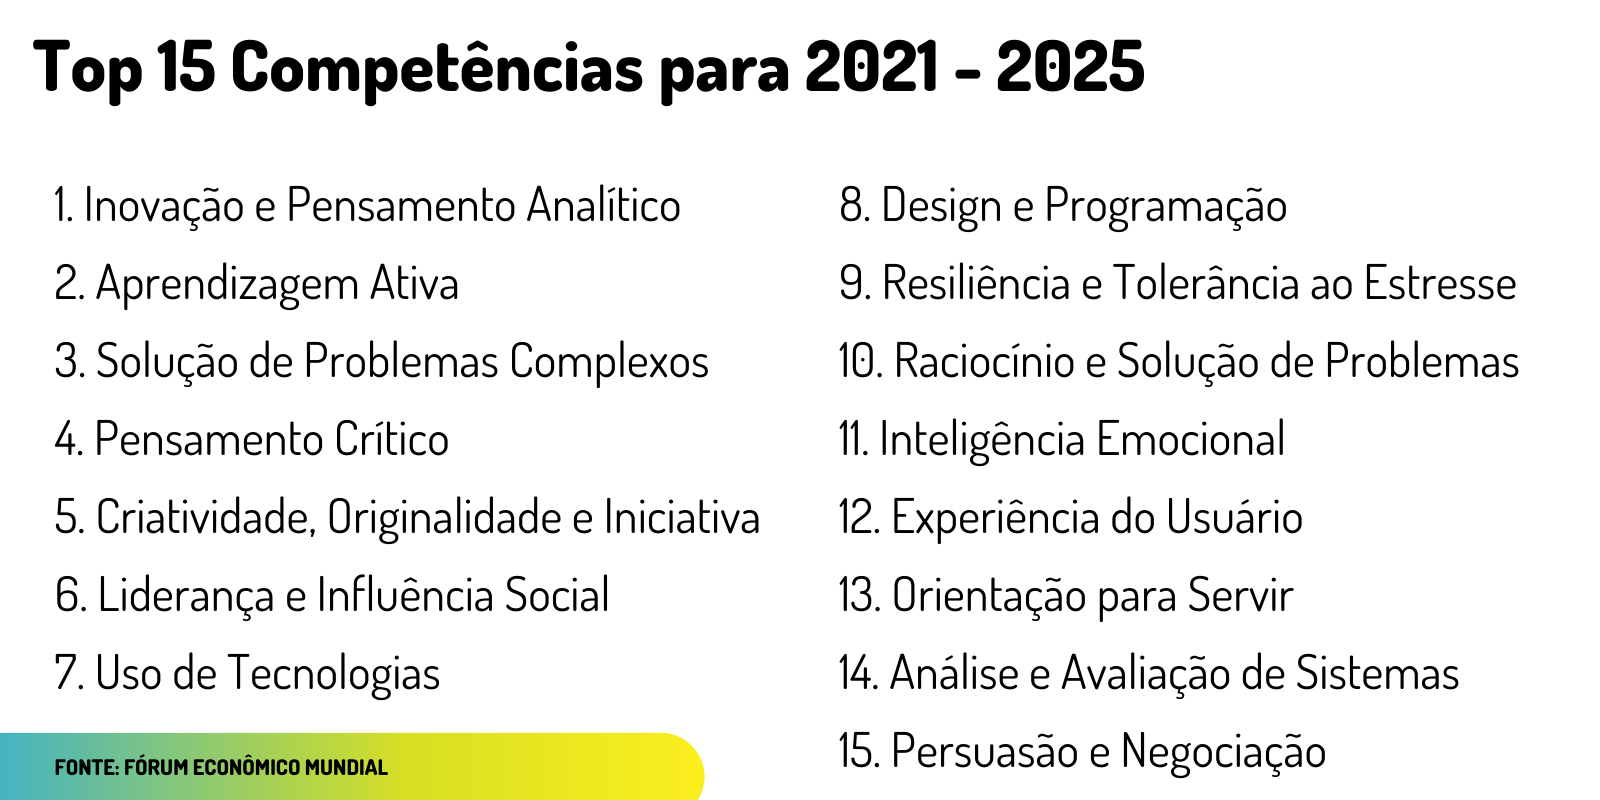 Top Competências para 2021 - 2025